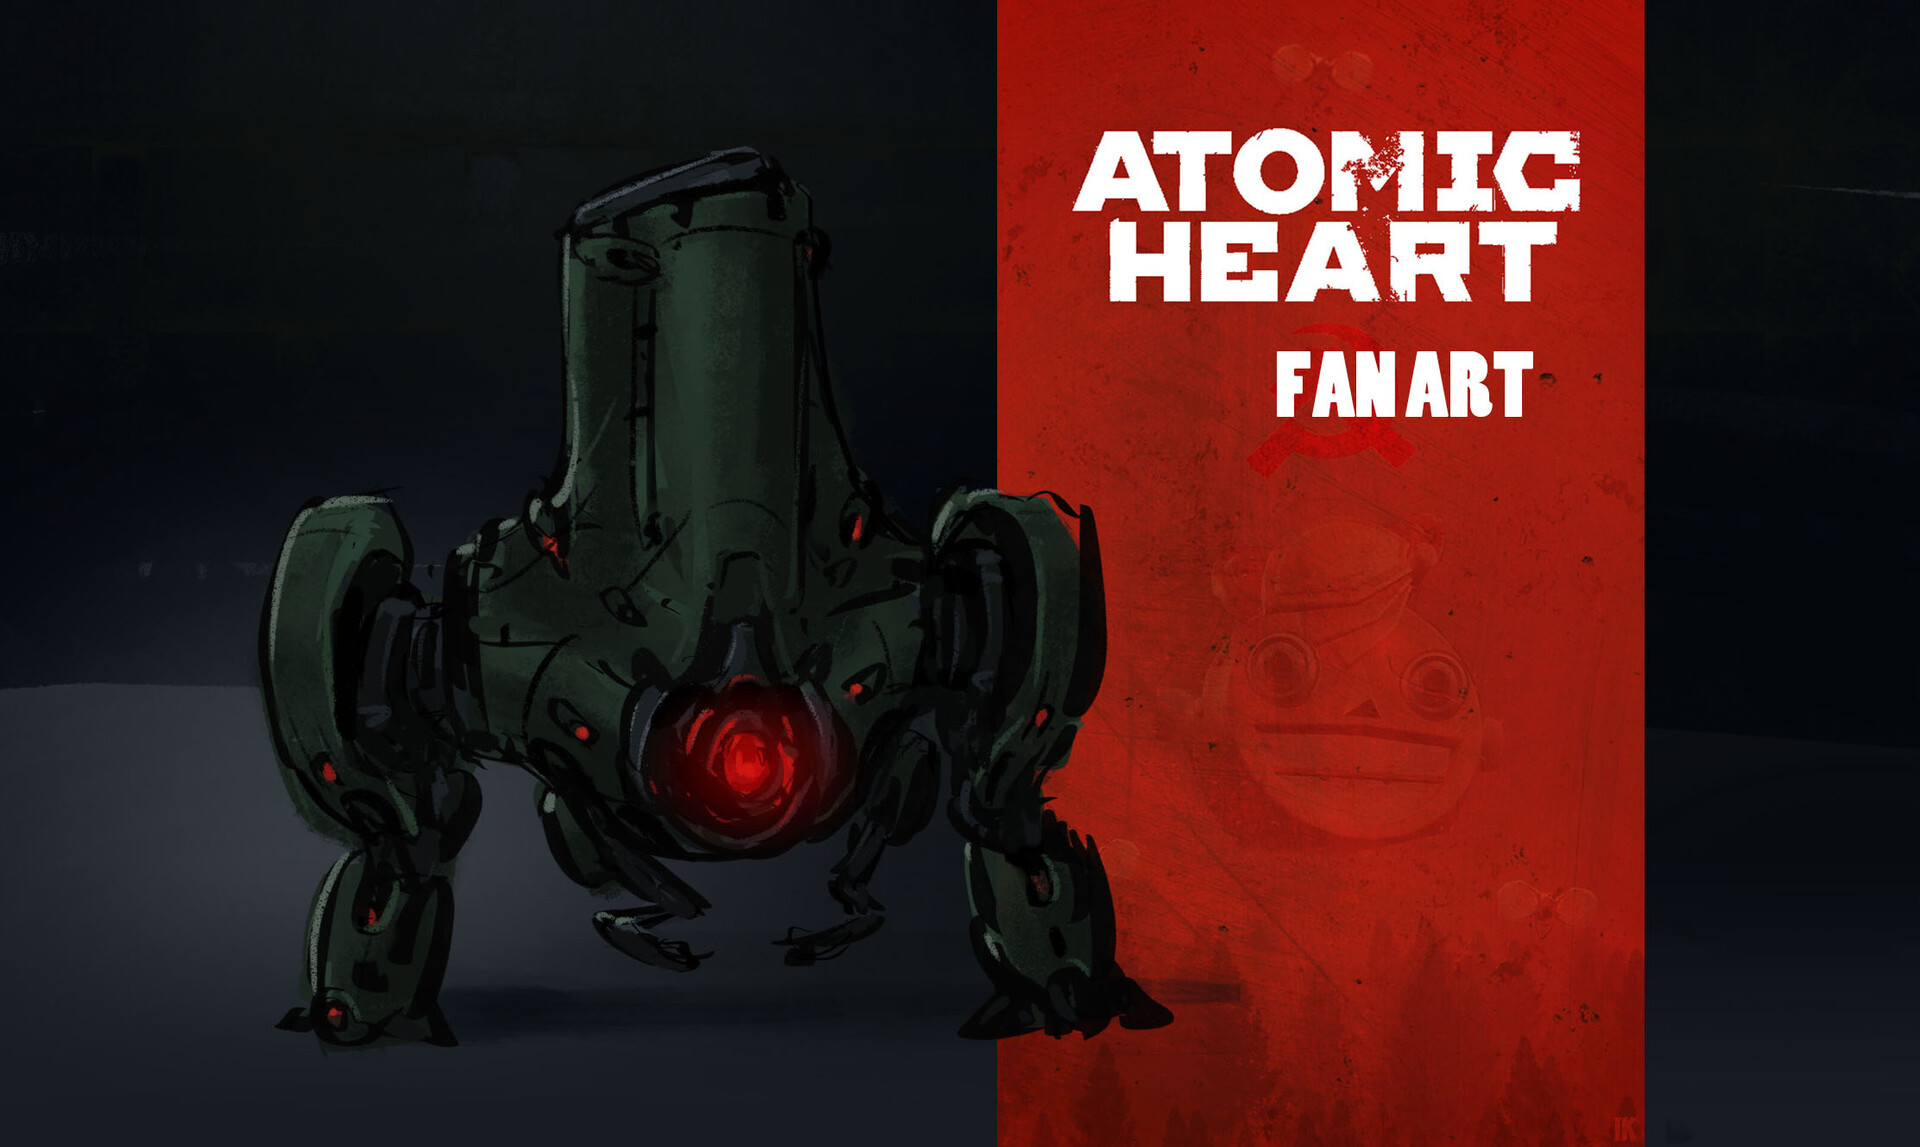 Томик харт. Атомик Hart. Роботы из Атомик Харт арт. Atomic Heart концепт арт. Робот Толстяк Atomic Heart.